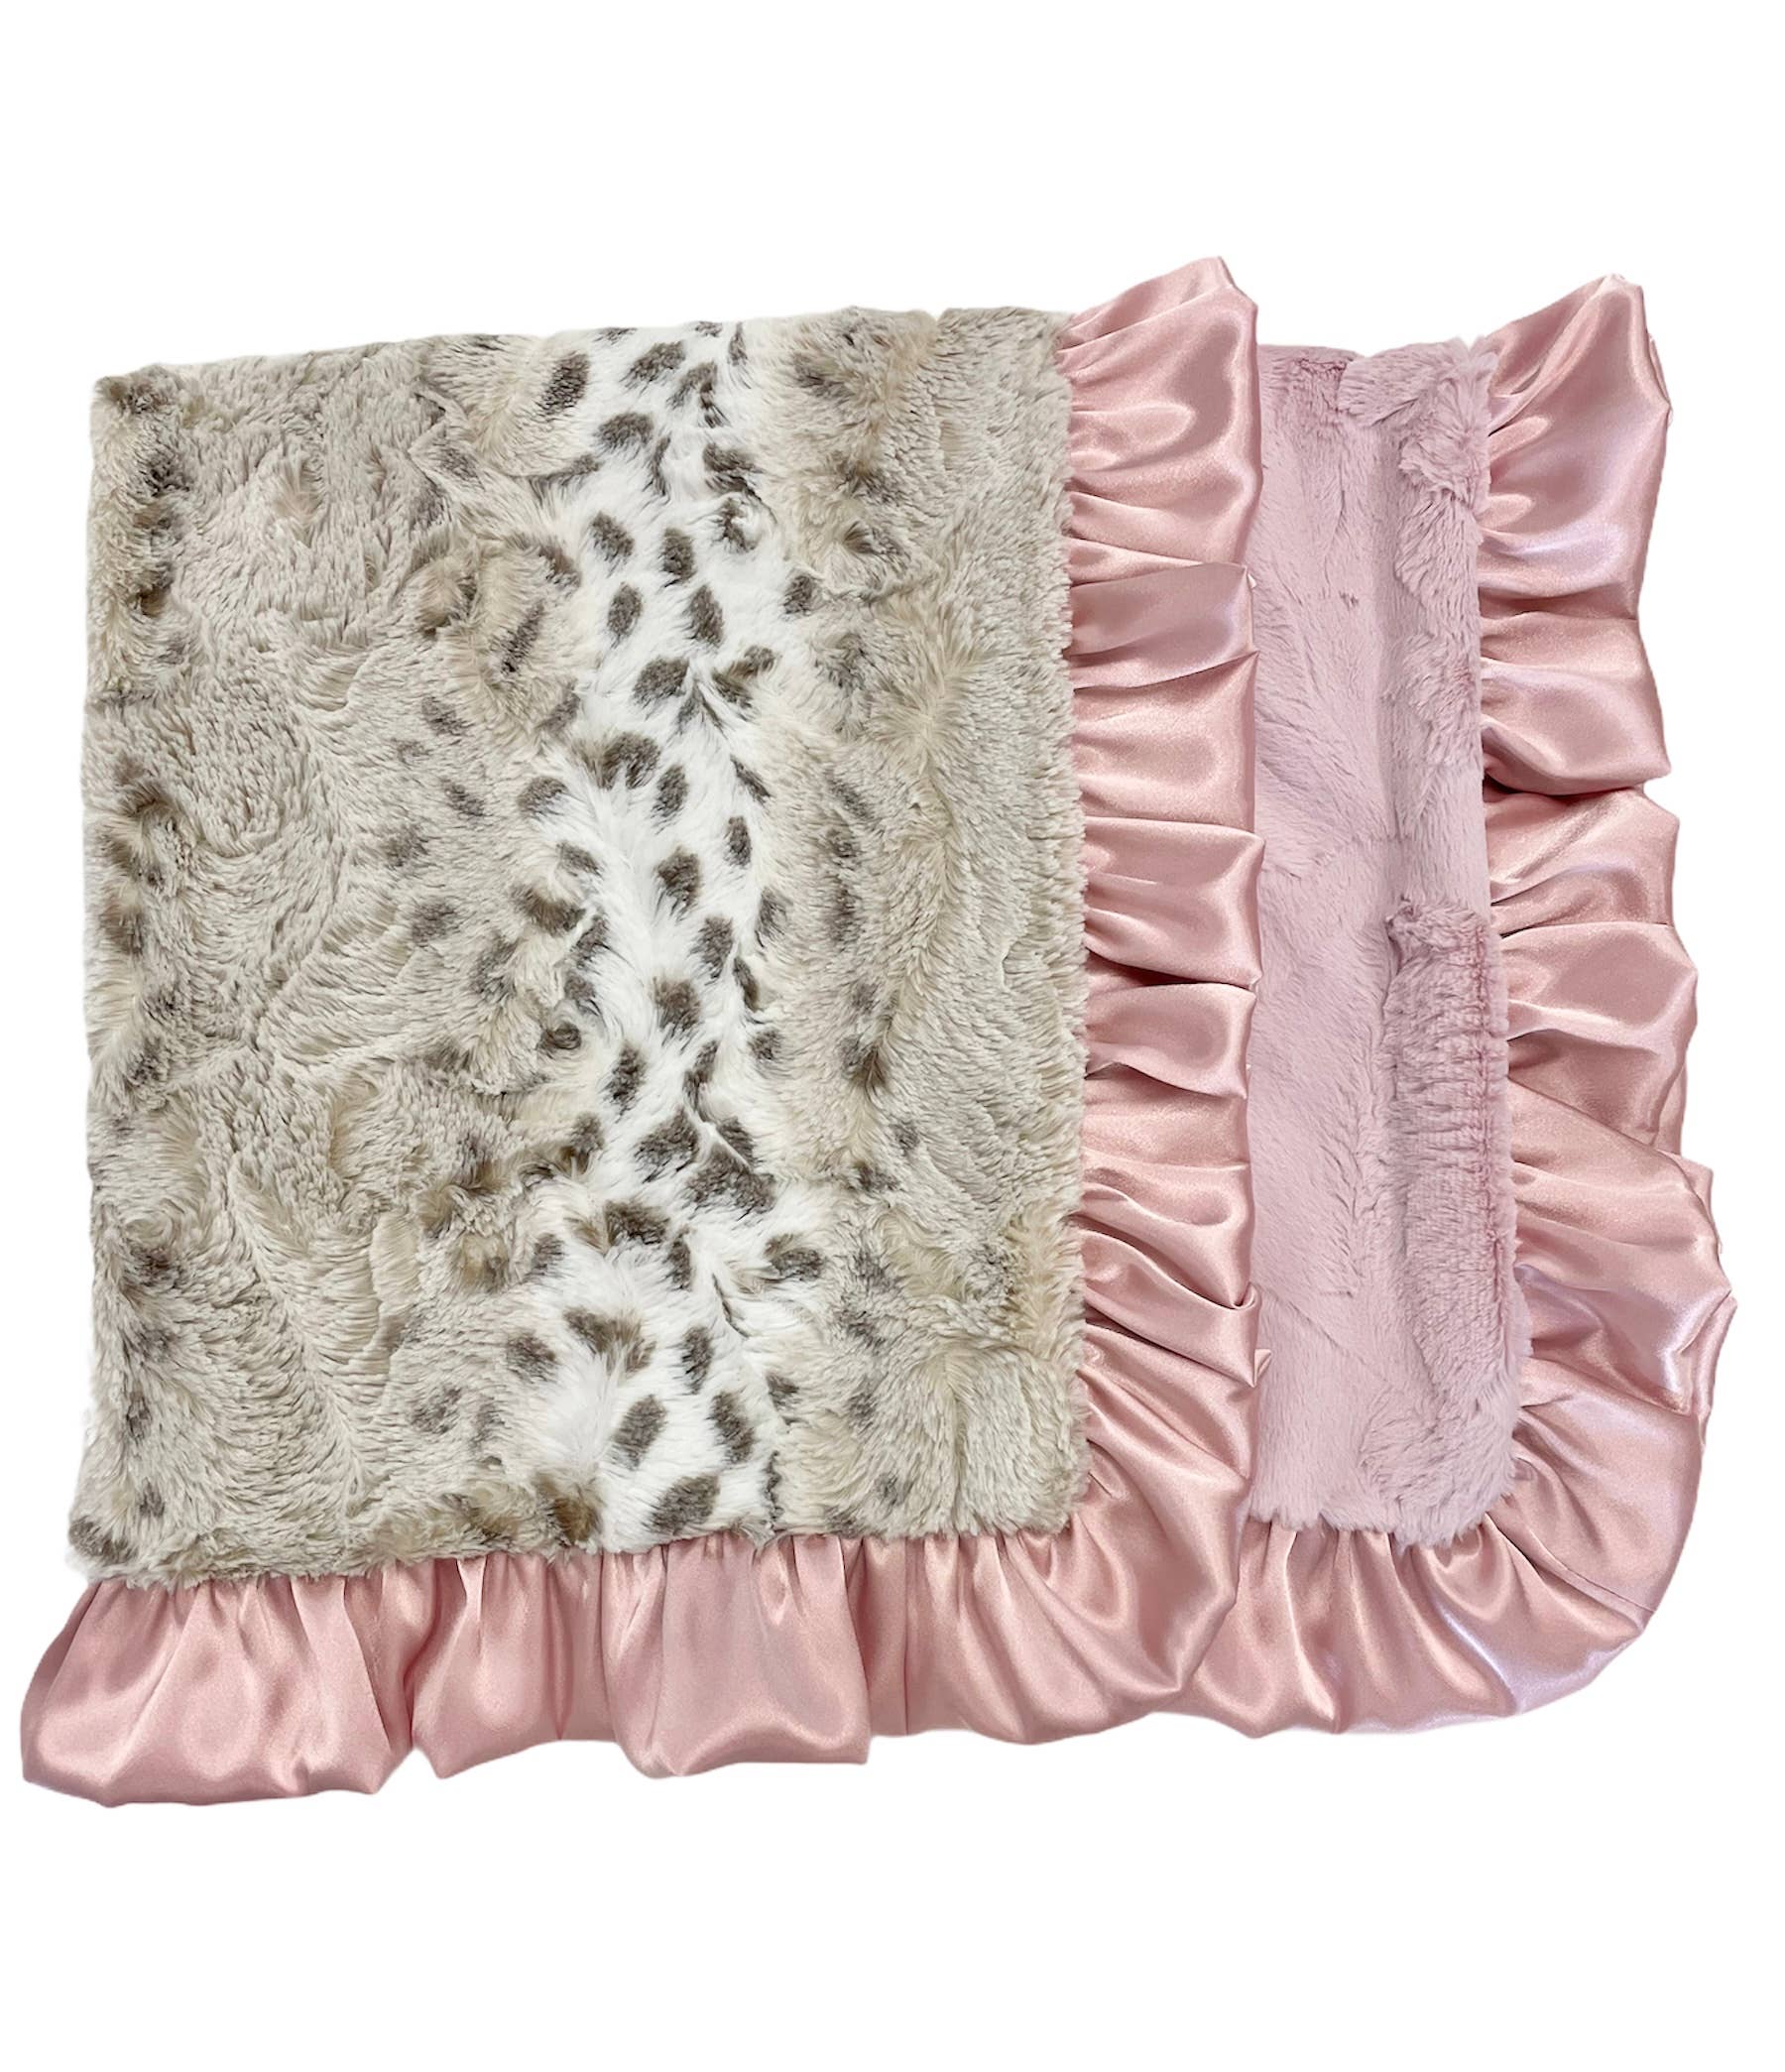 Luxe Cuddle Blanket - Snowcat Dusty Pink